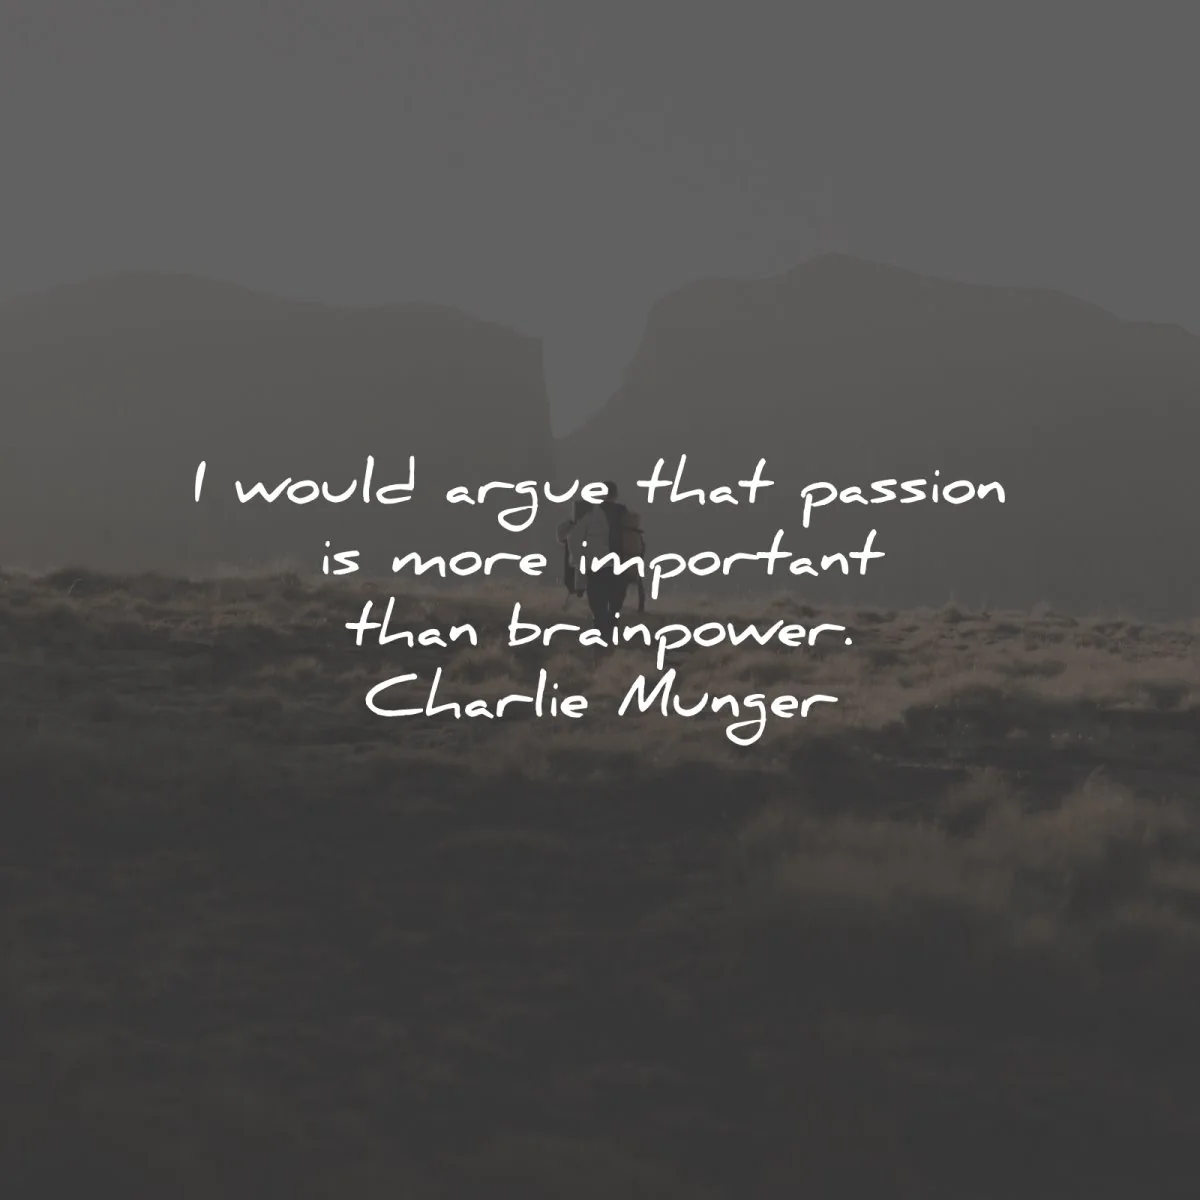 charlie munger quotes would argue passion important brainpower wisdom